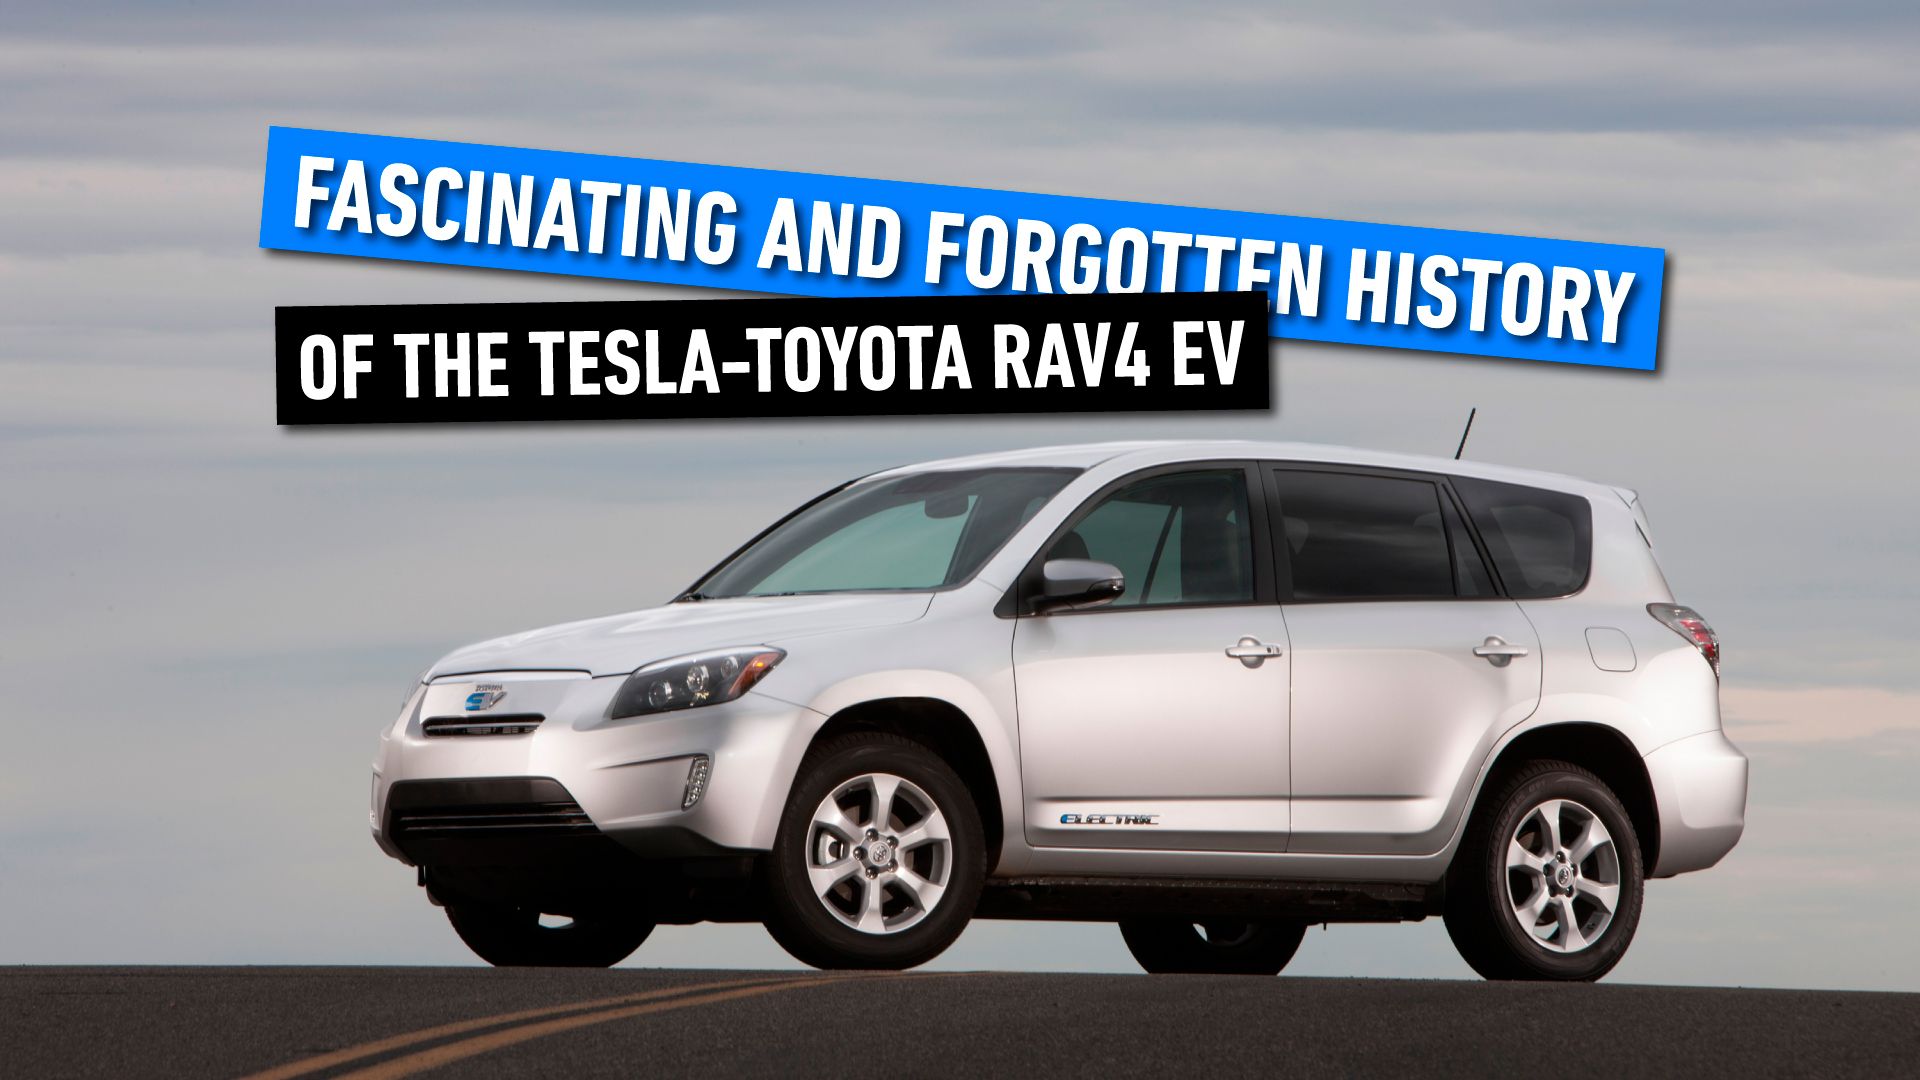 Tesla-Toyota RAV4 EV: The Fascinating And Forgotten History